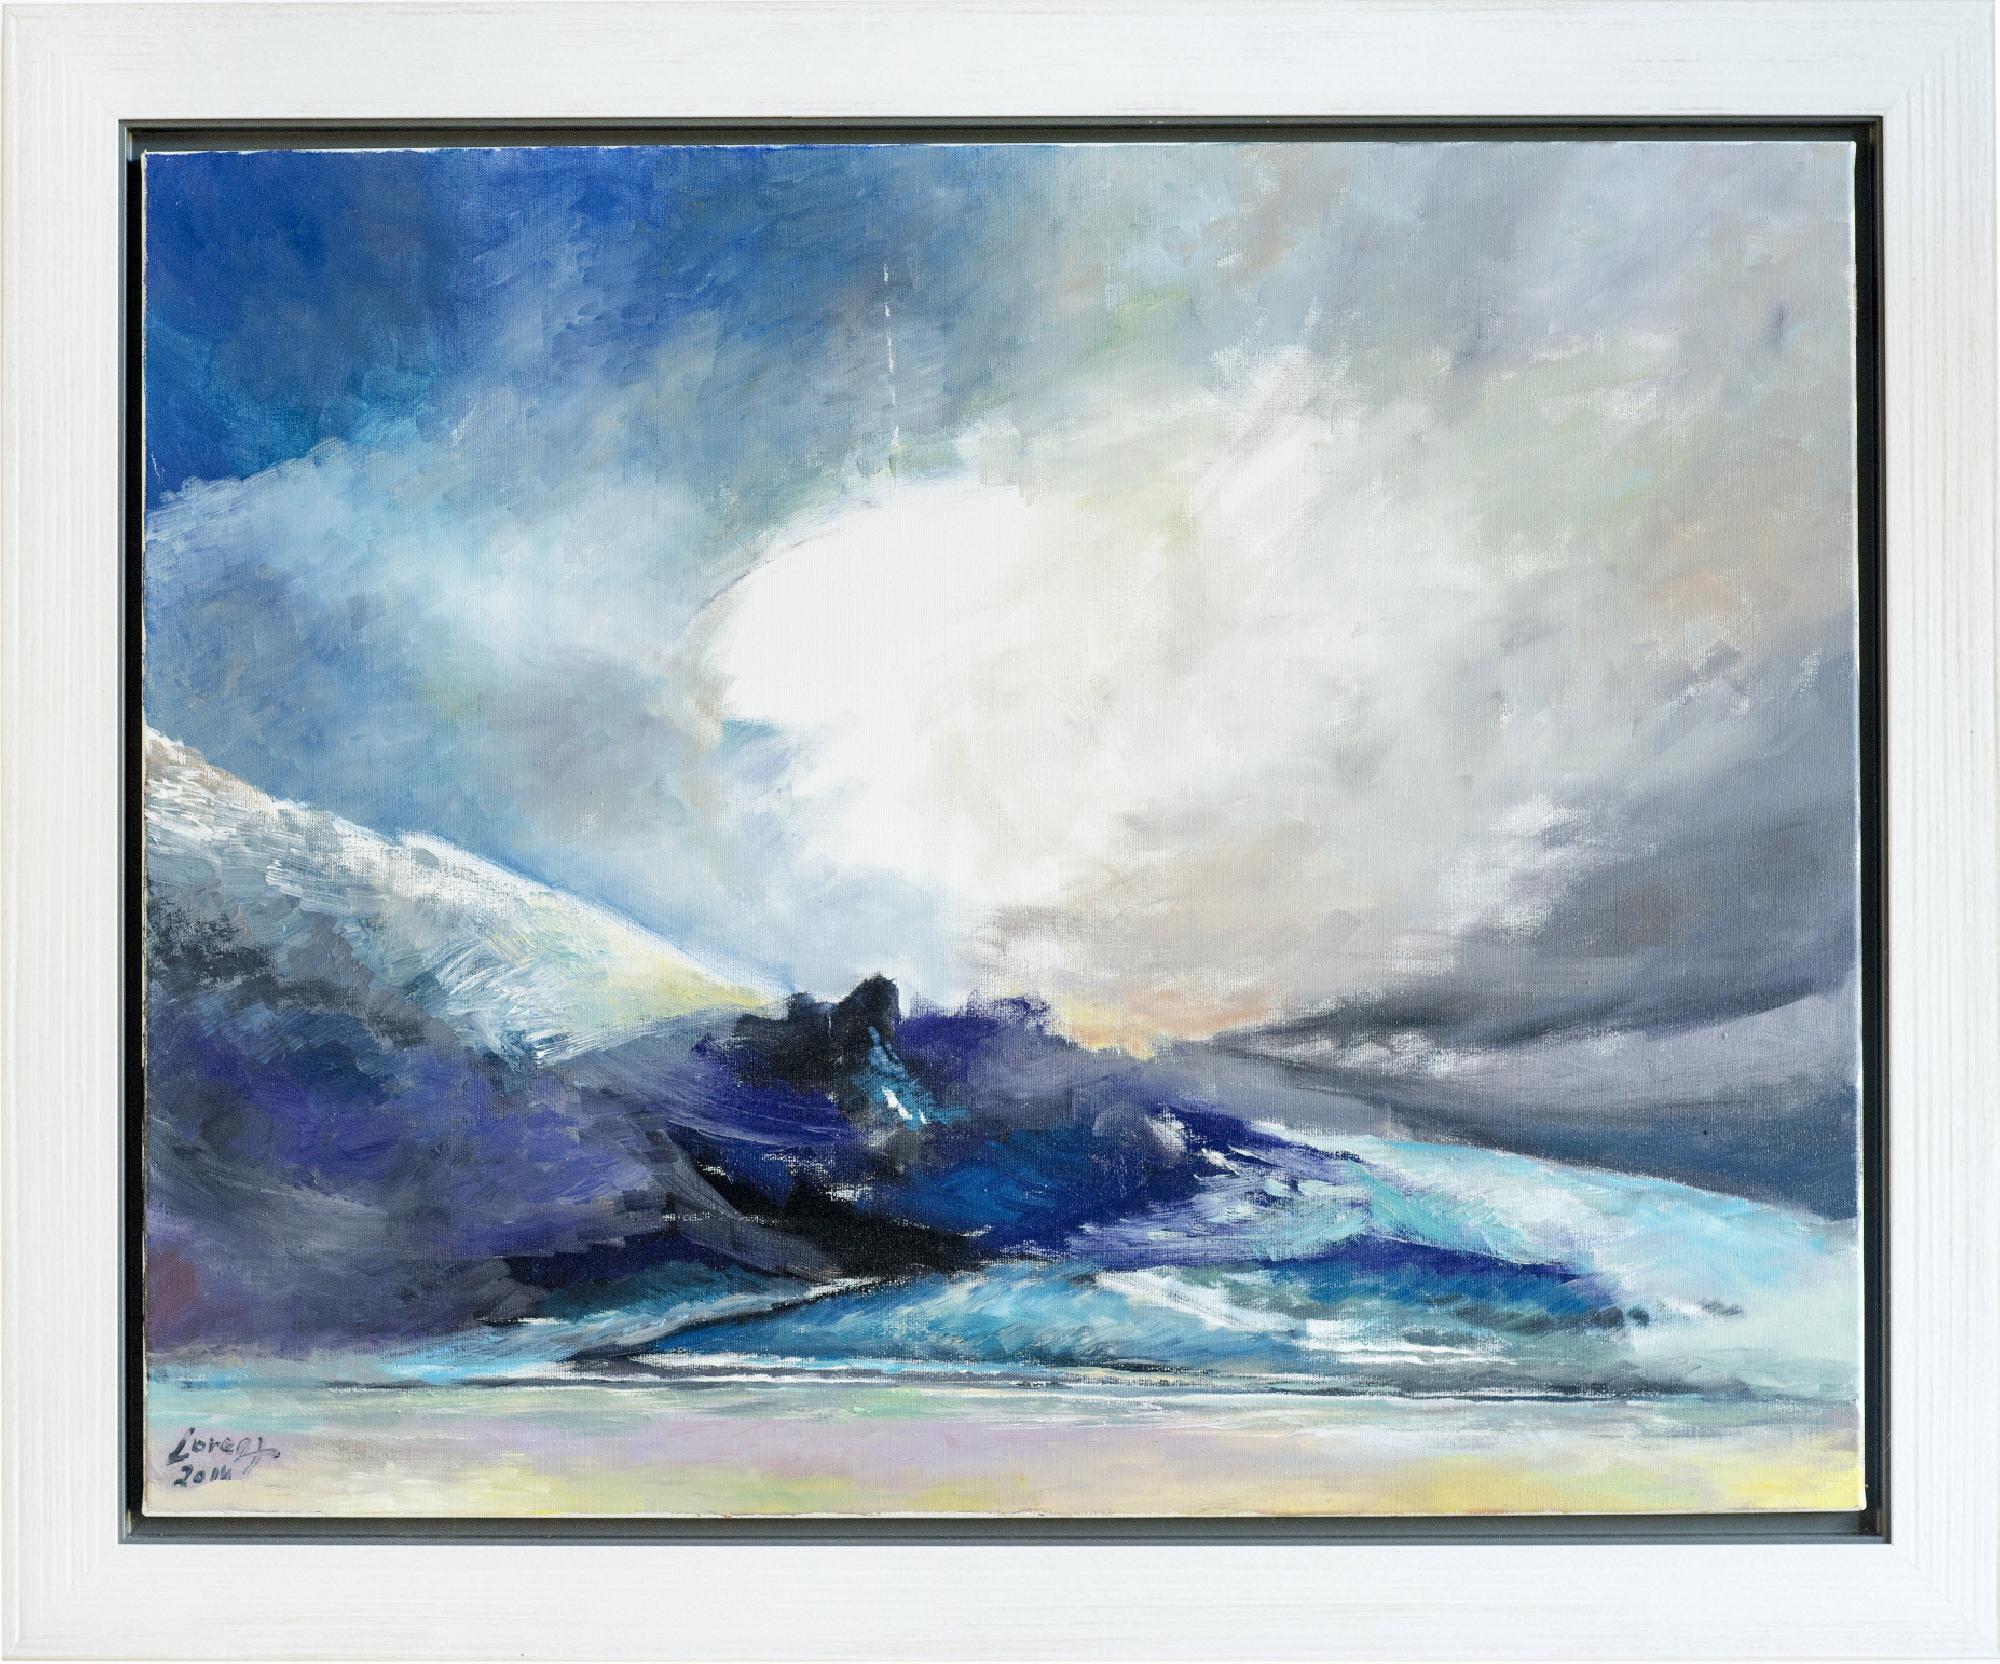 Leonard Lorenz: Amrum
2014
80 × 100 cm
Oil on canvas